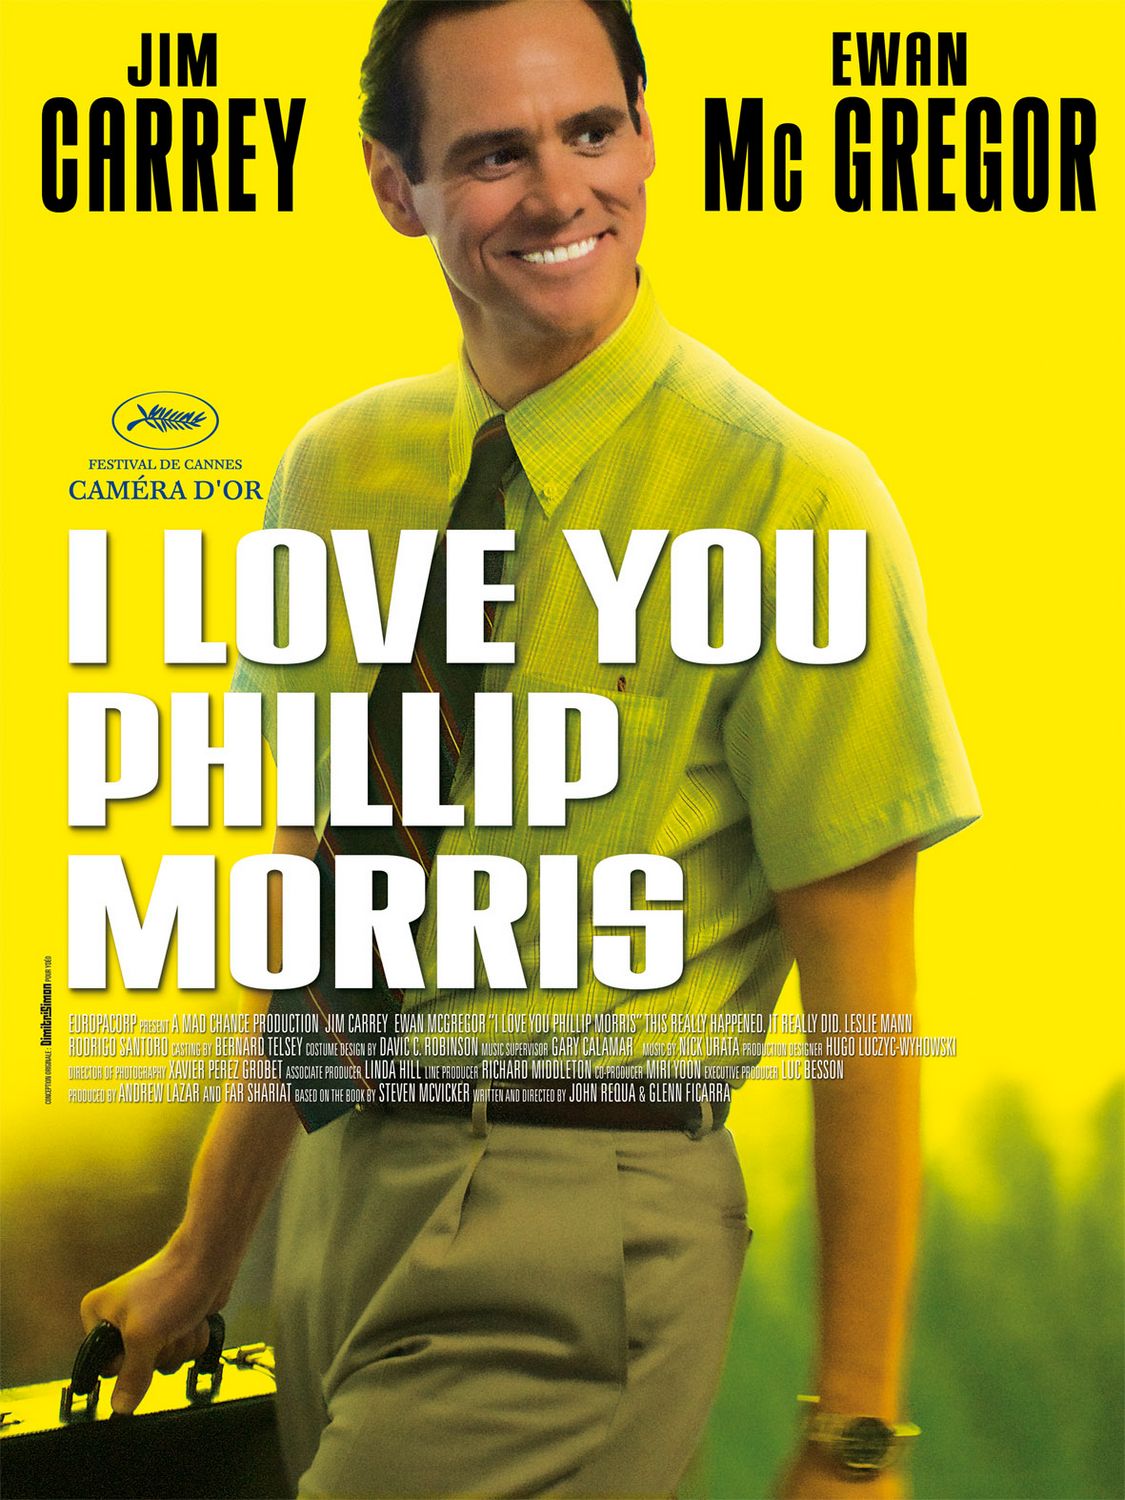 I LOVE YOU PHILLIP MORRIS Movie POSTER 27x40 UK Jim Carrey Ewan McGregor Leslie 